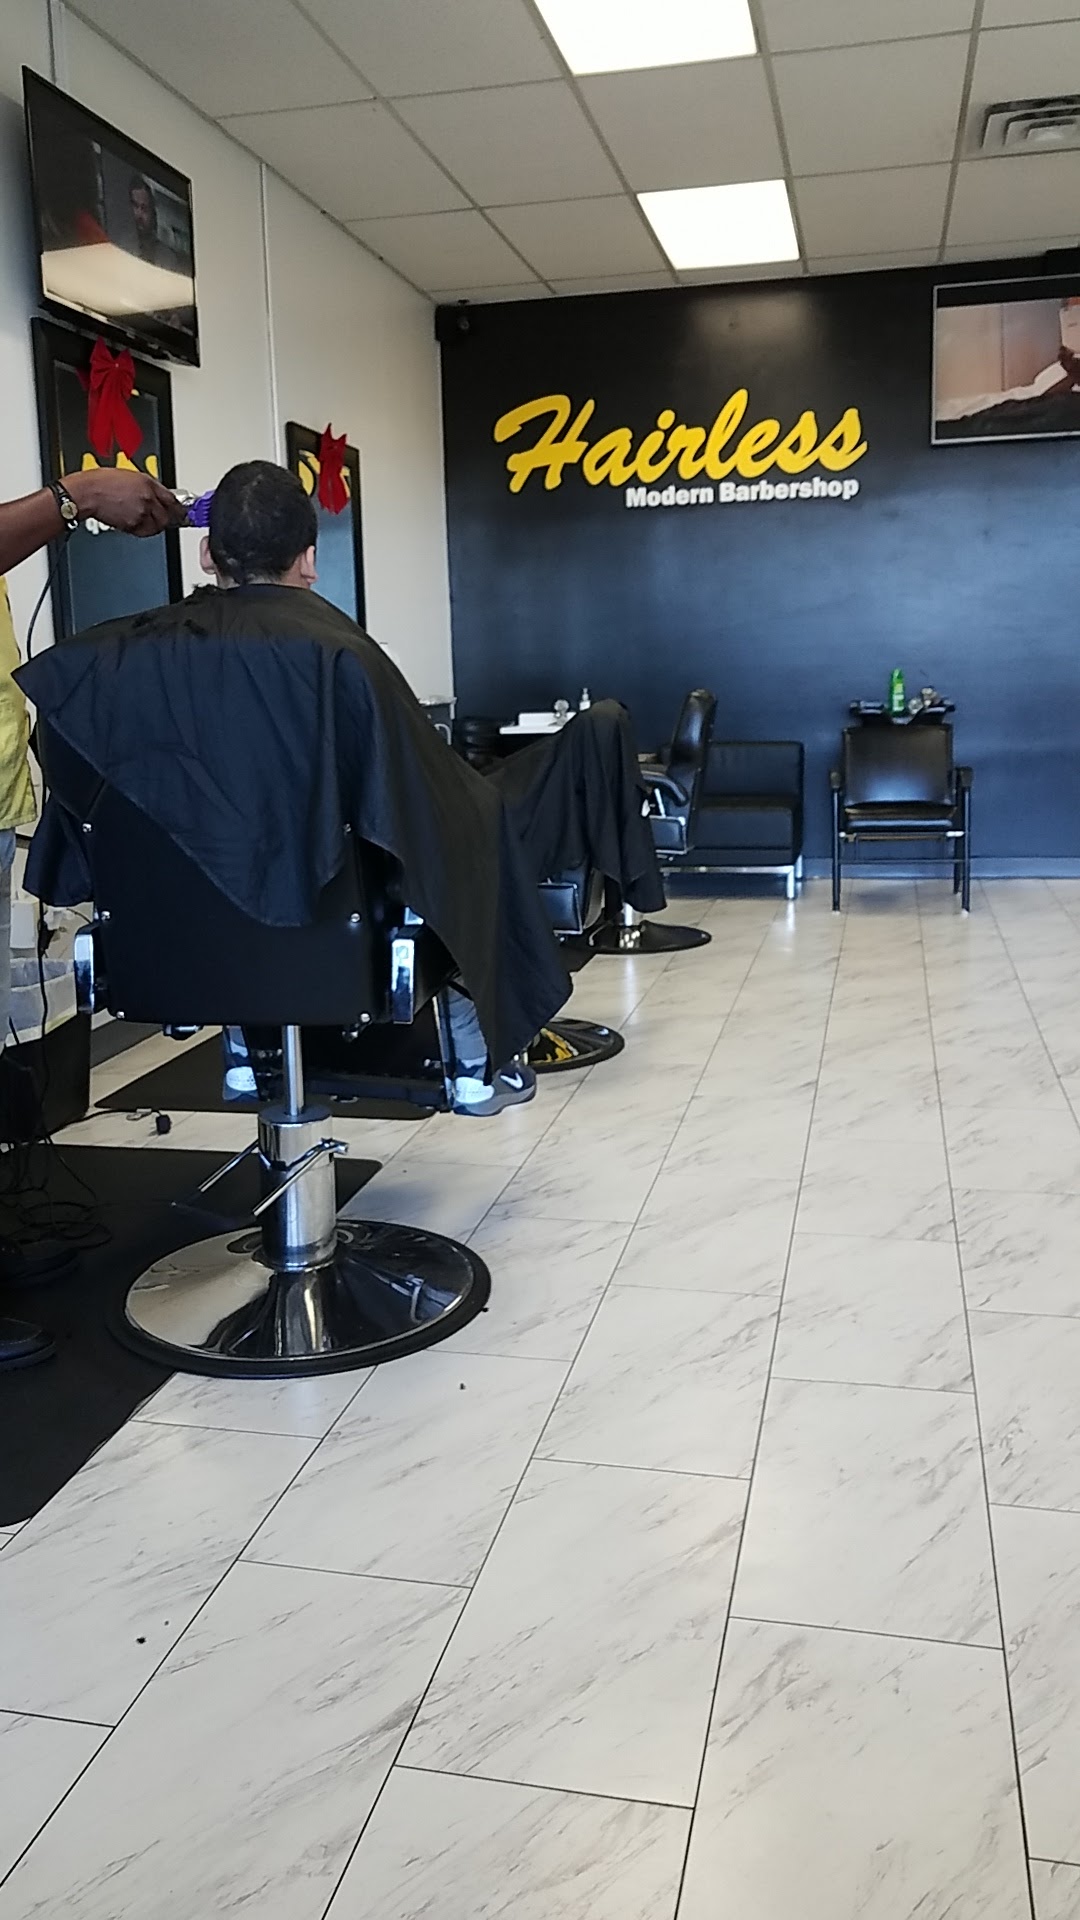 Hairless Modern Barbershop